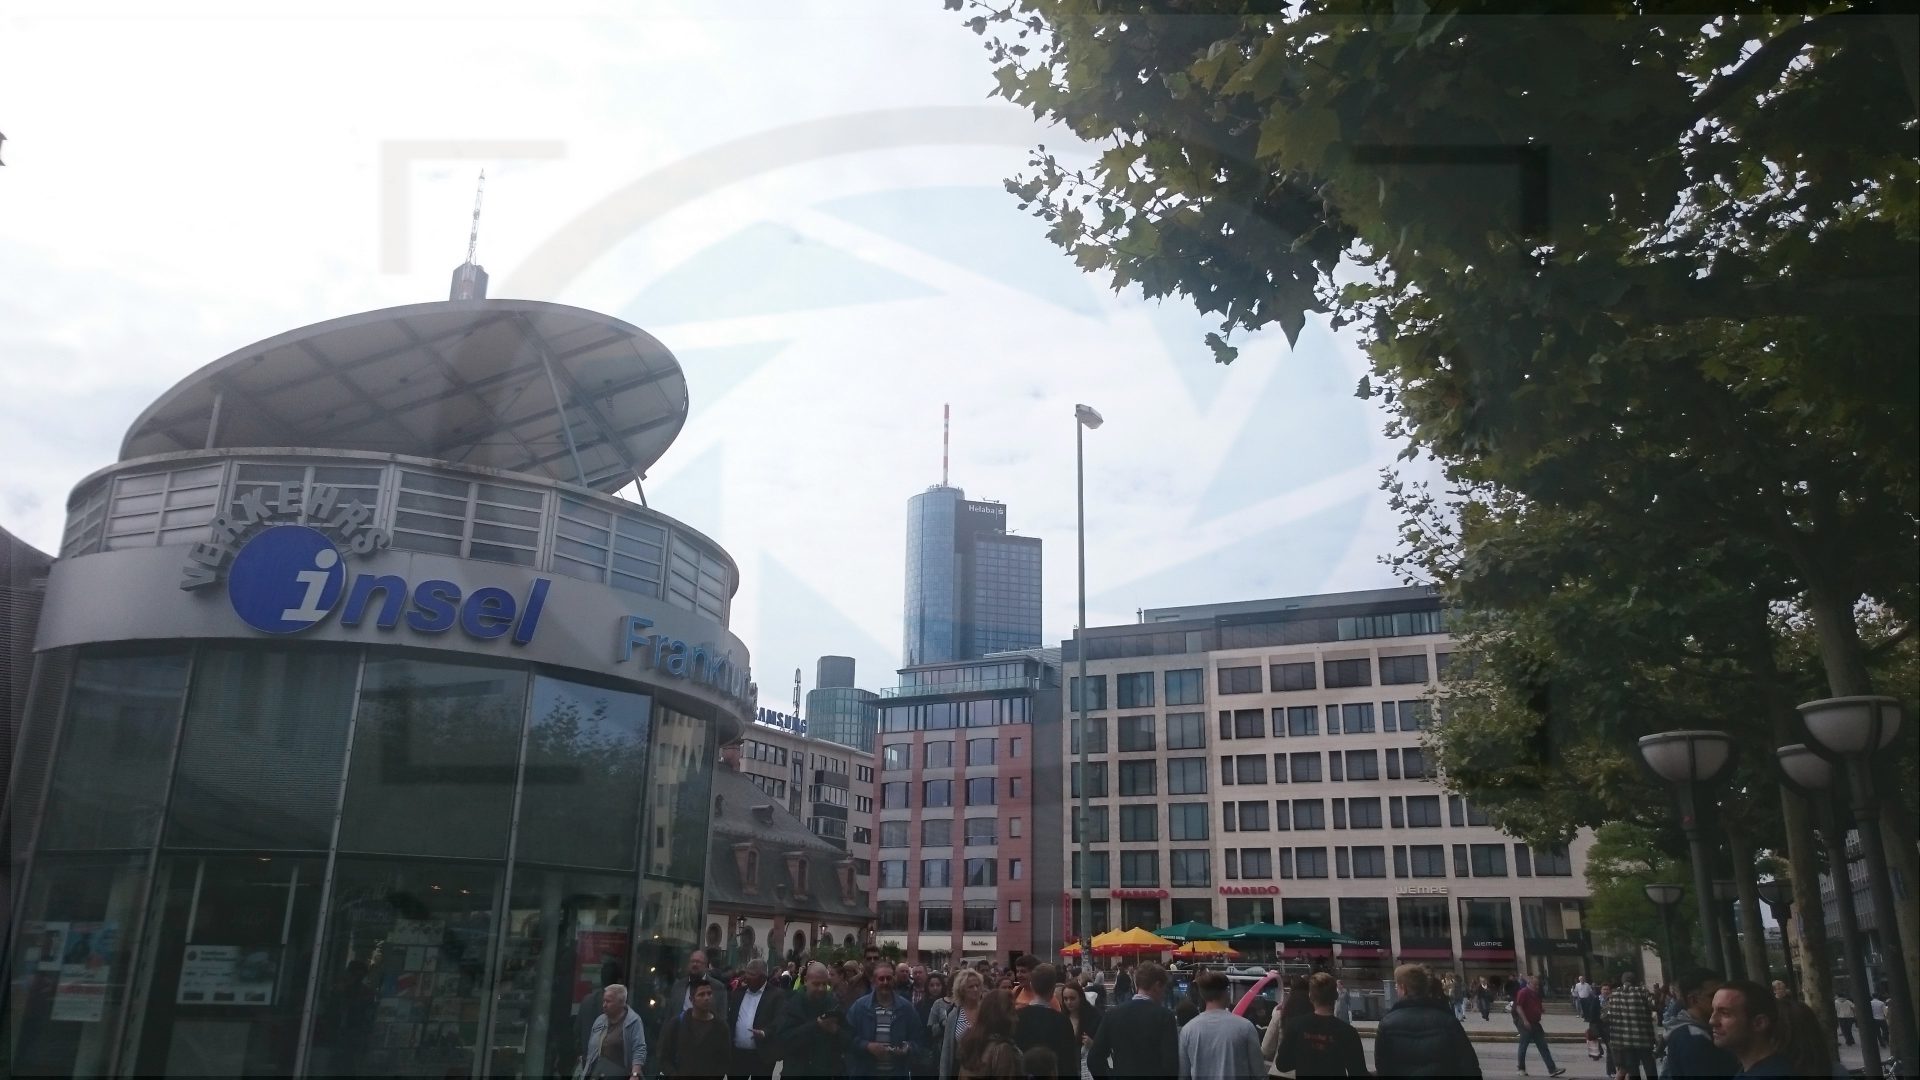 Fotos 360 (Parte 2) Plaza Konstablerwache de Frankfurt. #VidePan por #Frankfurt